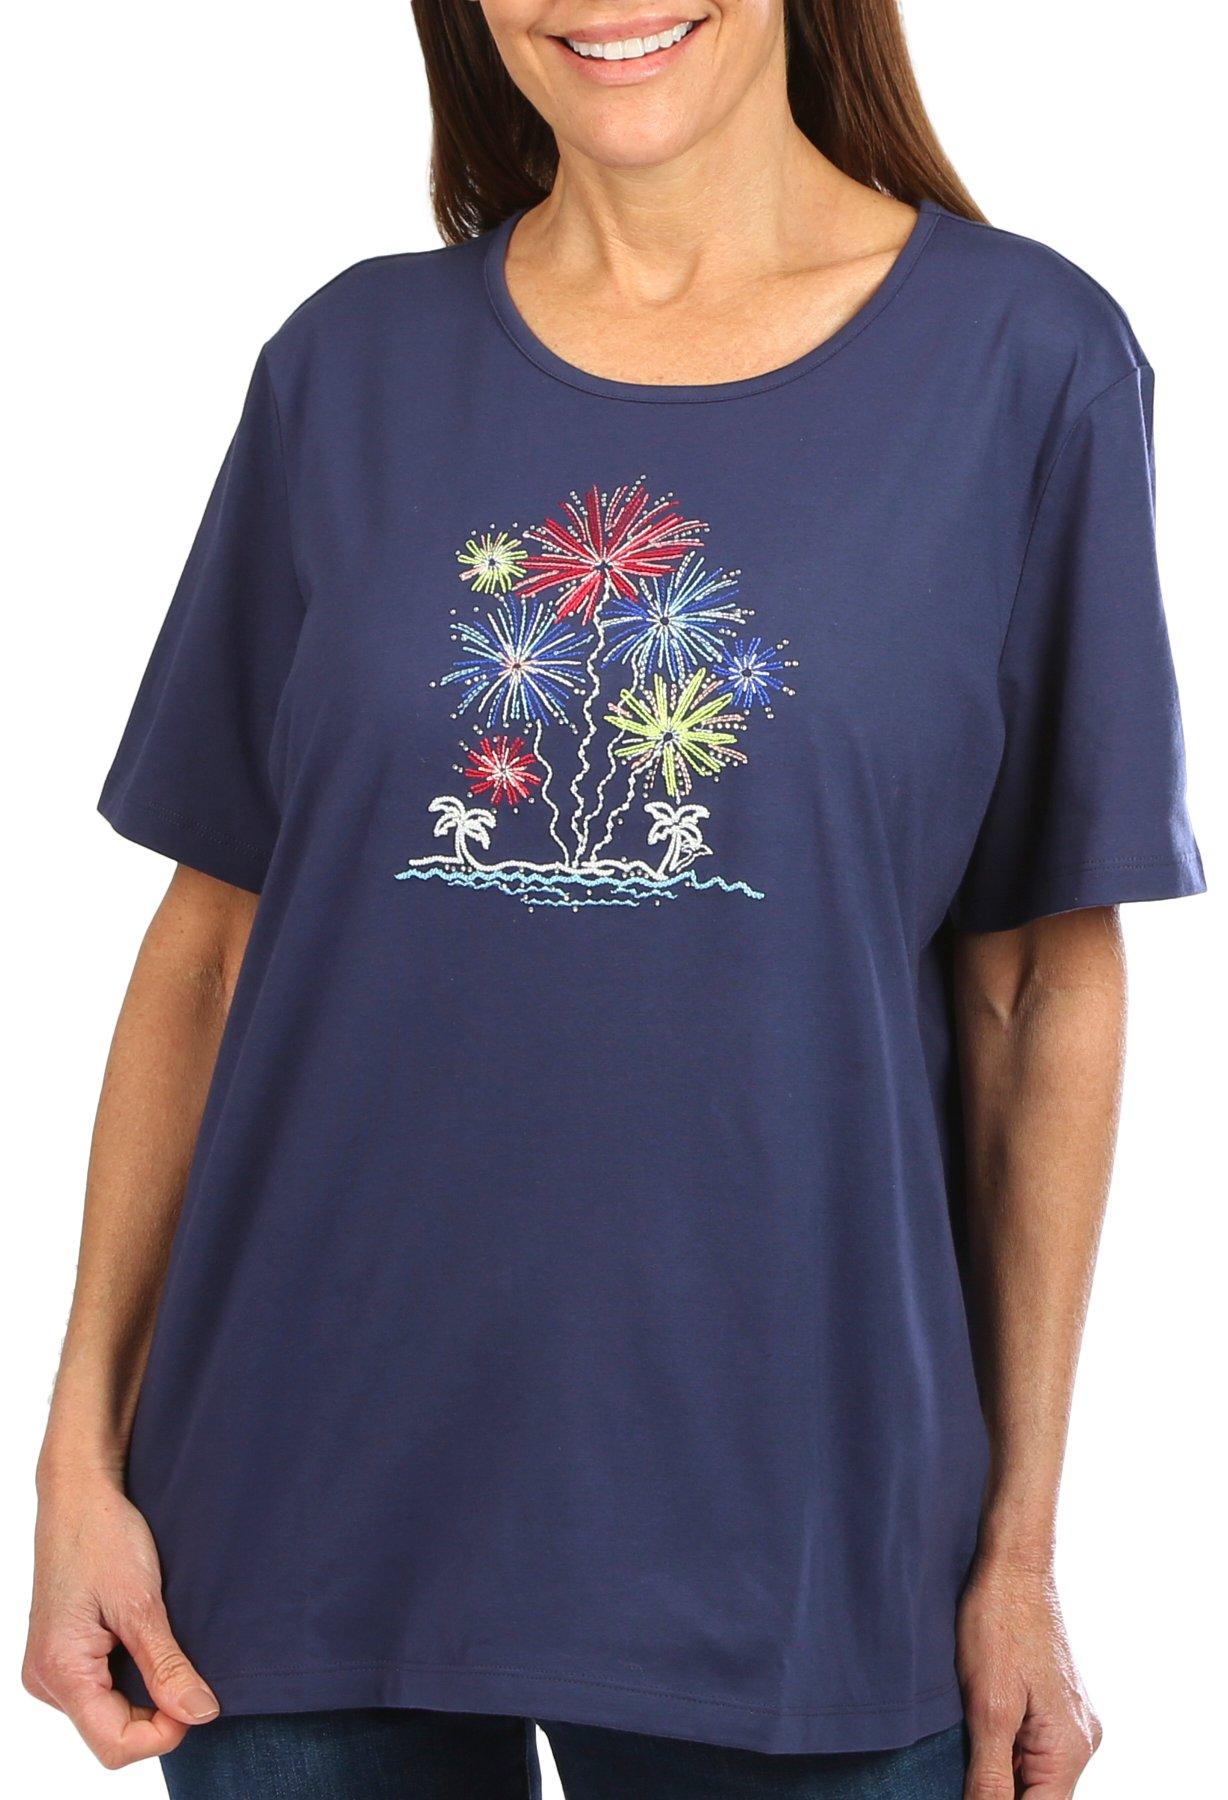 Petite Americana Fireworks Jewel Short Sleeve Top